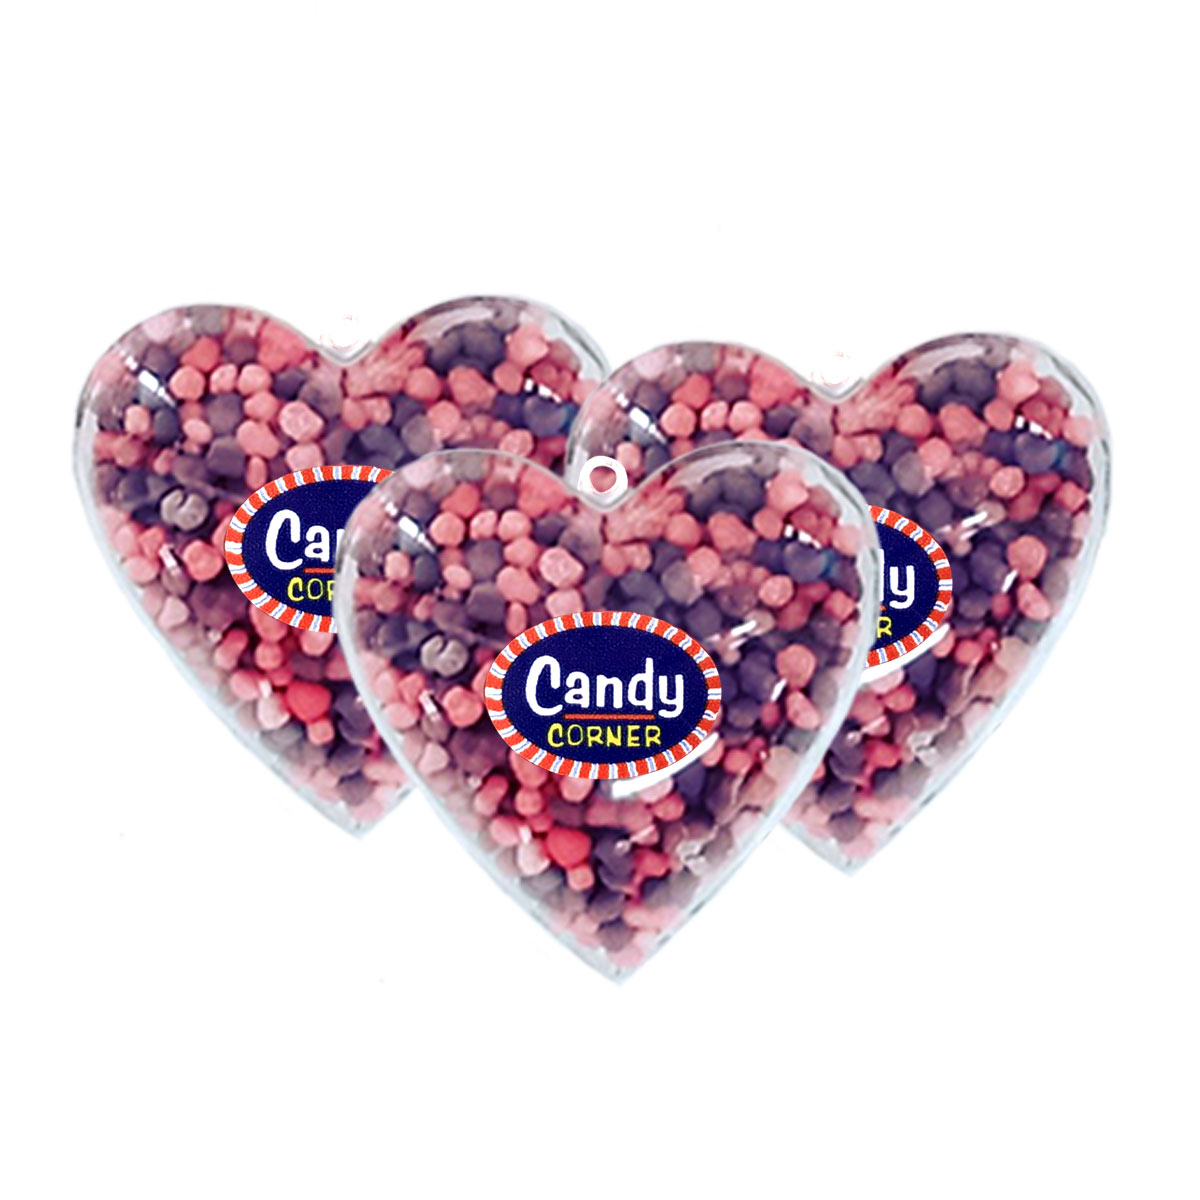 Candy Corner Nerds Grape Strawberry in heart 80g x 3pcs